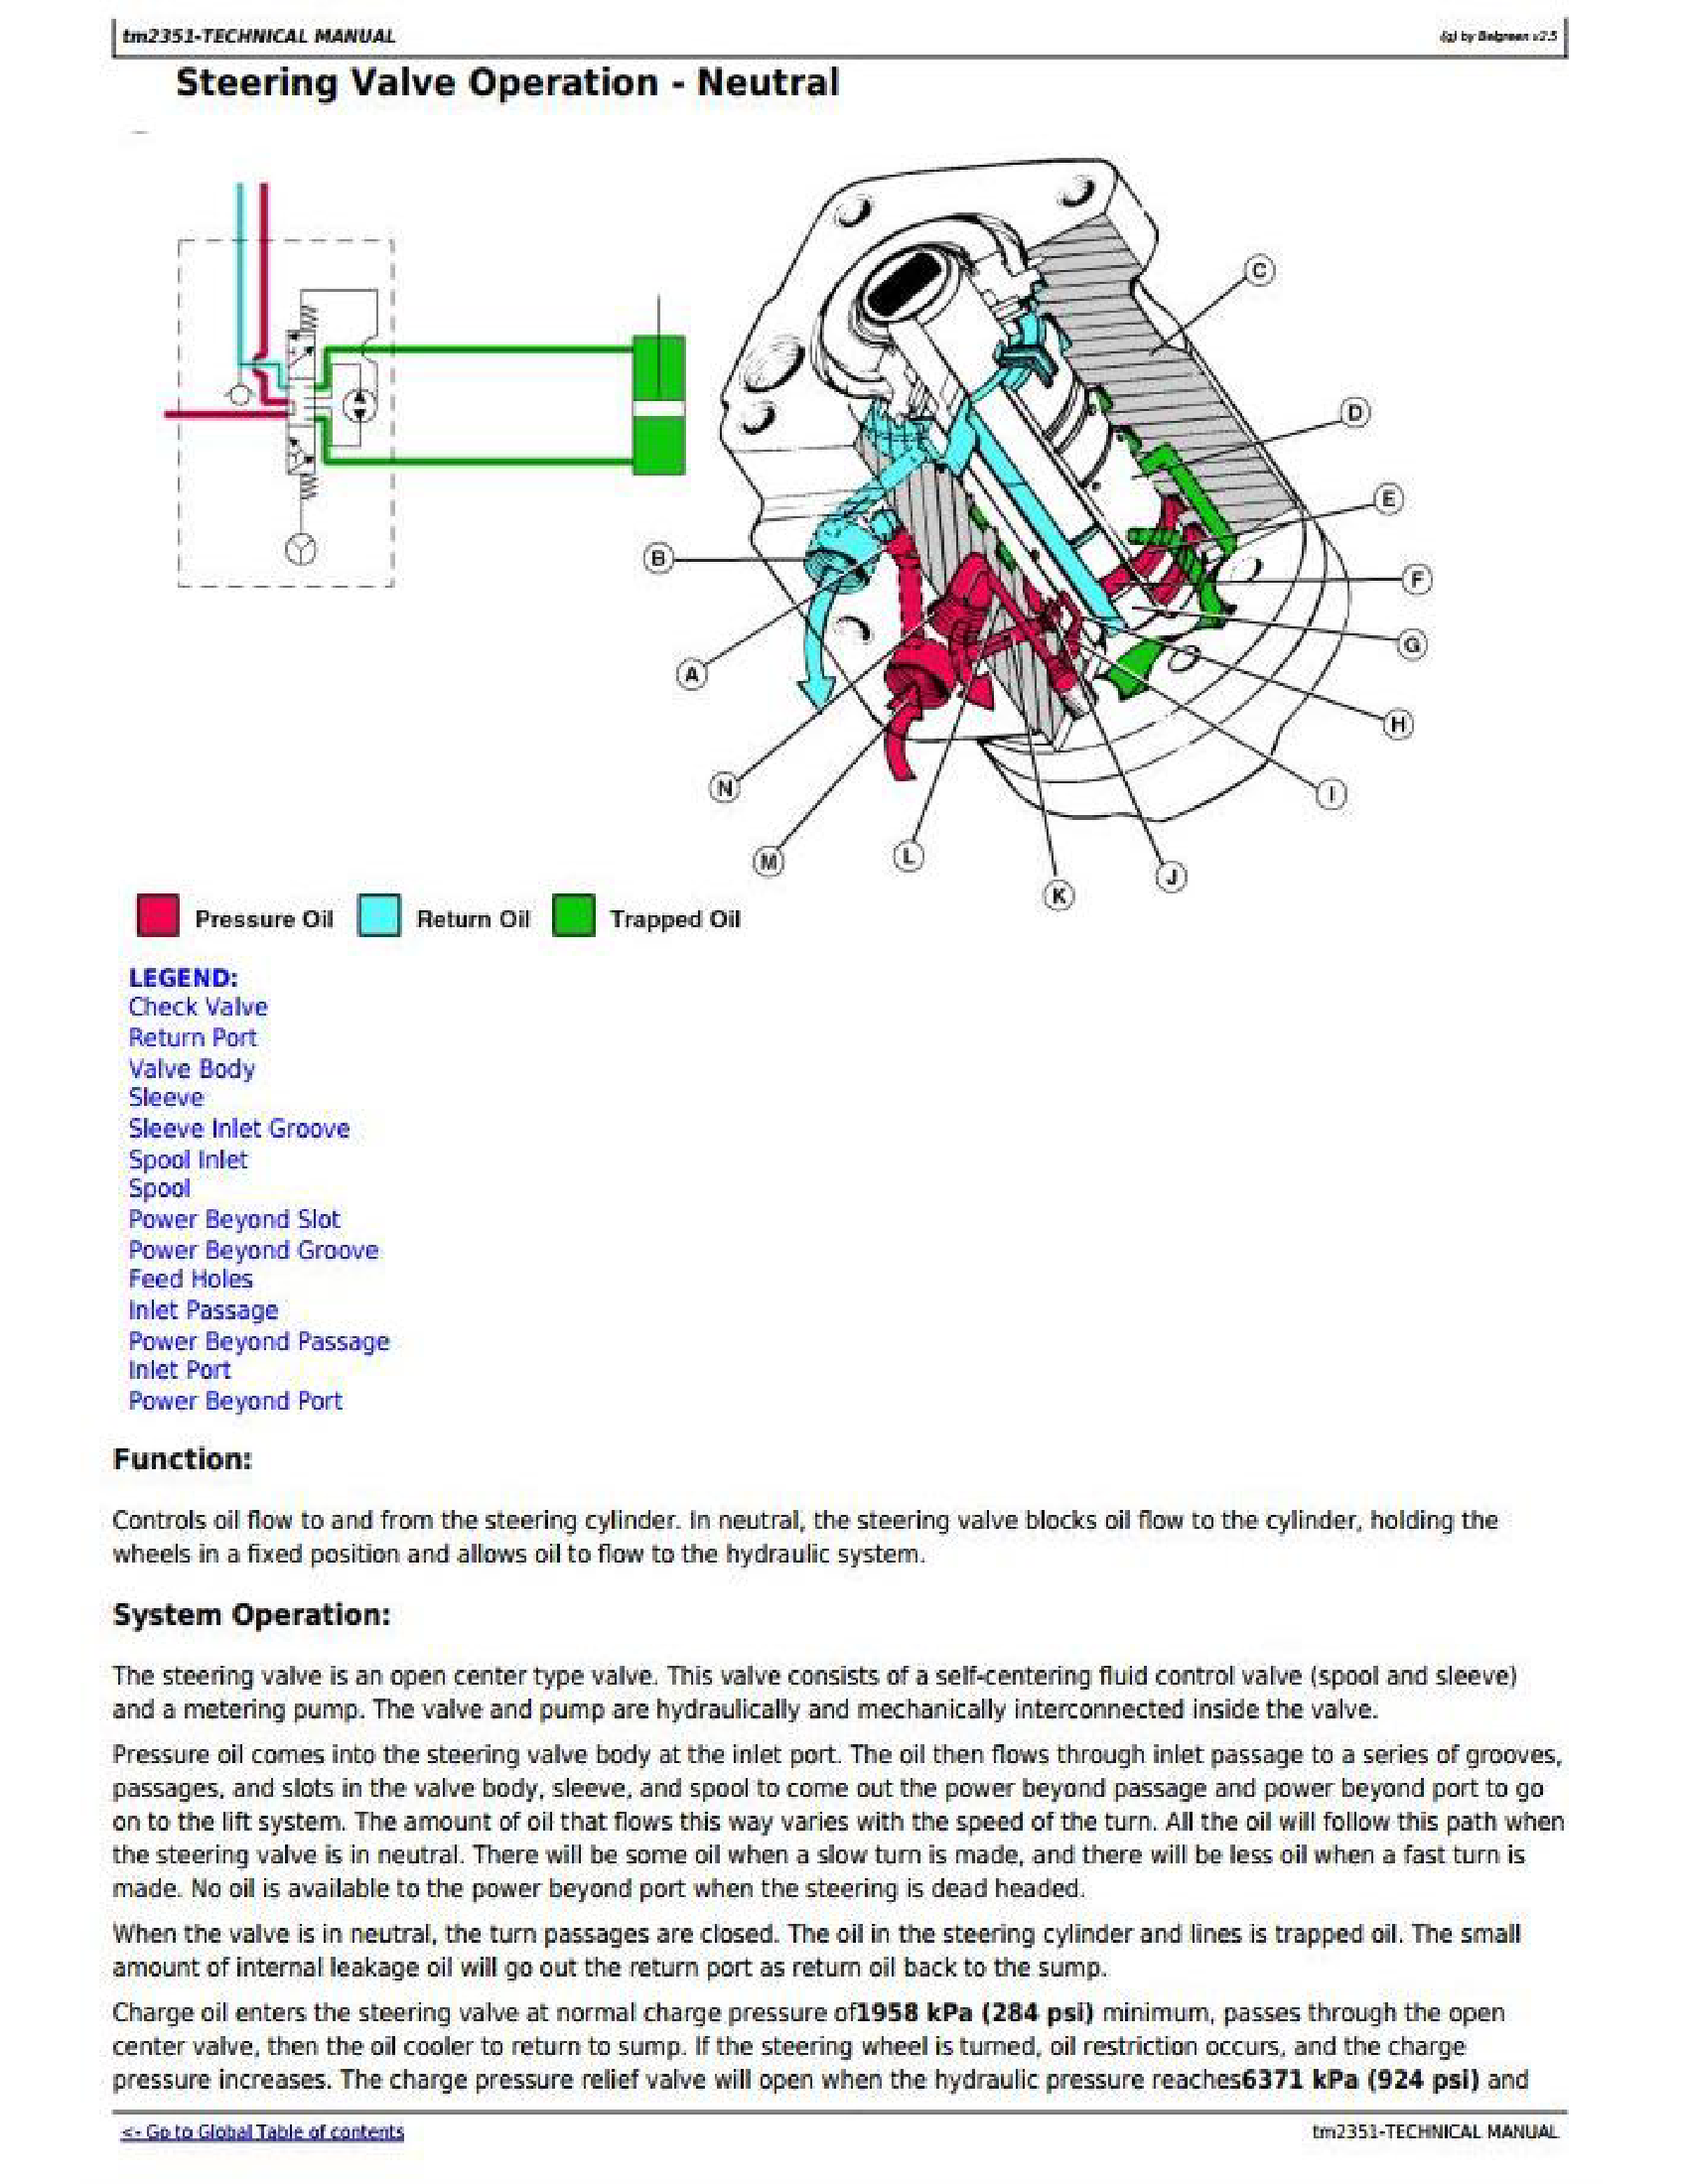 John Deere 1FF026GX**K260001��������������� manual pdf